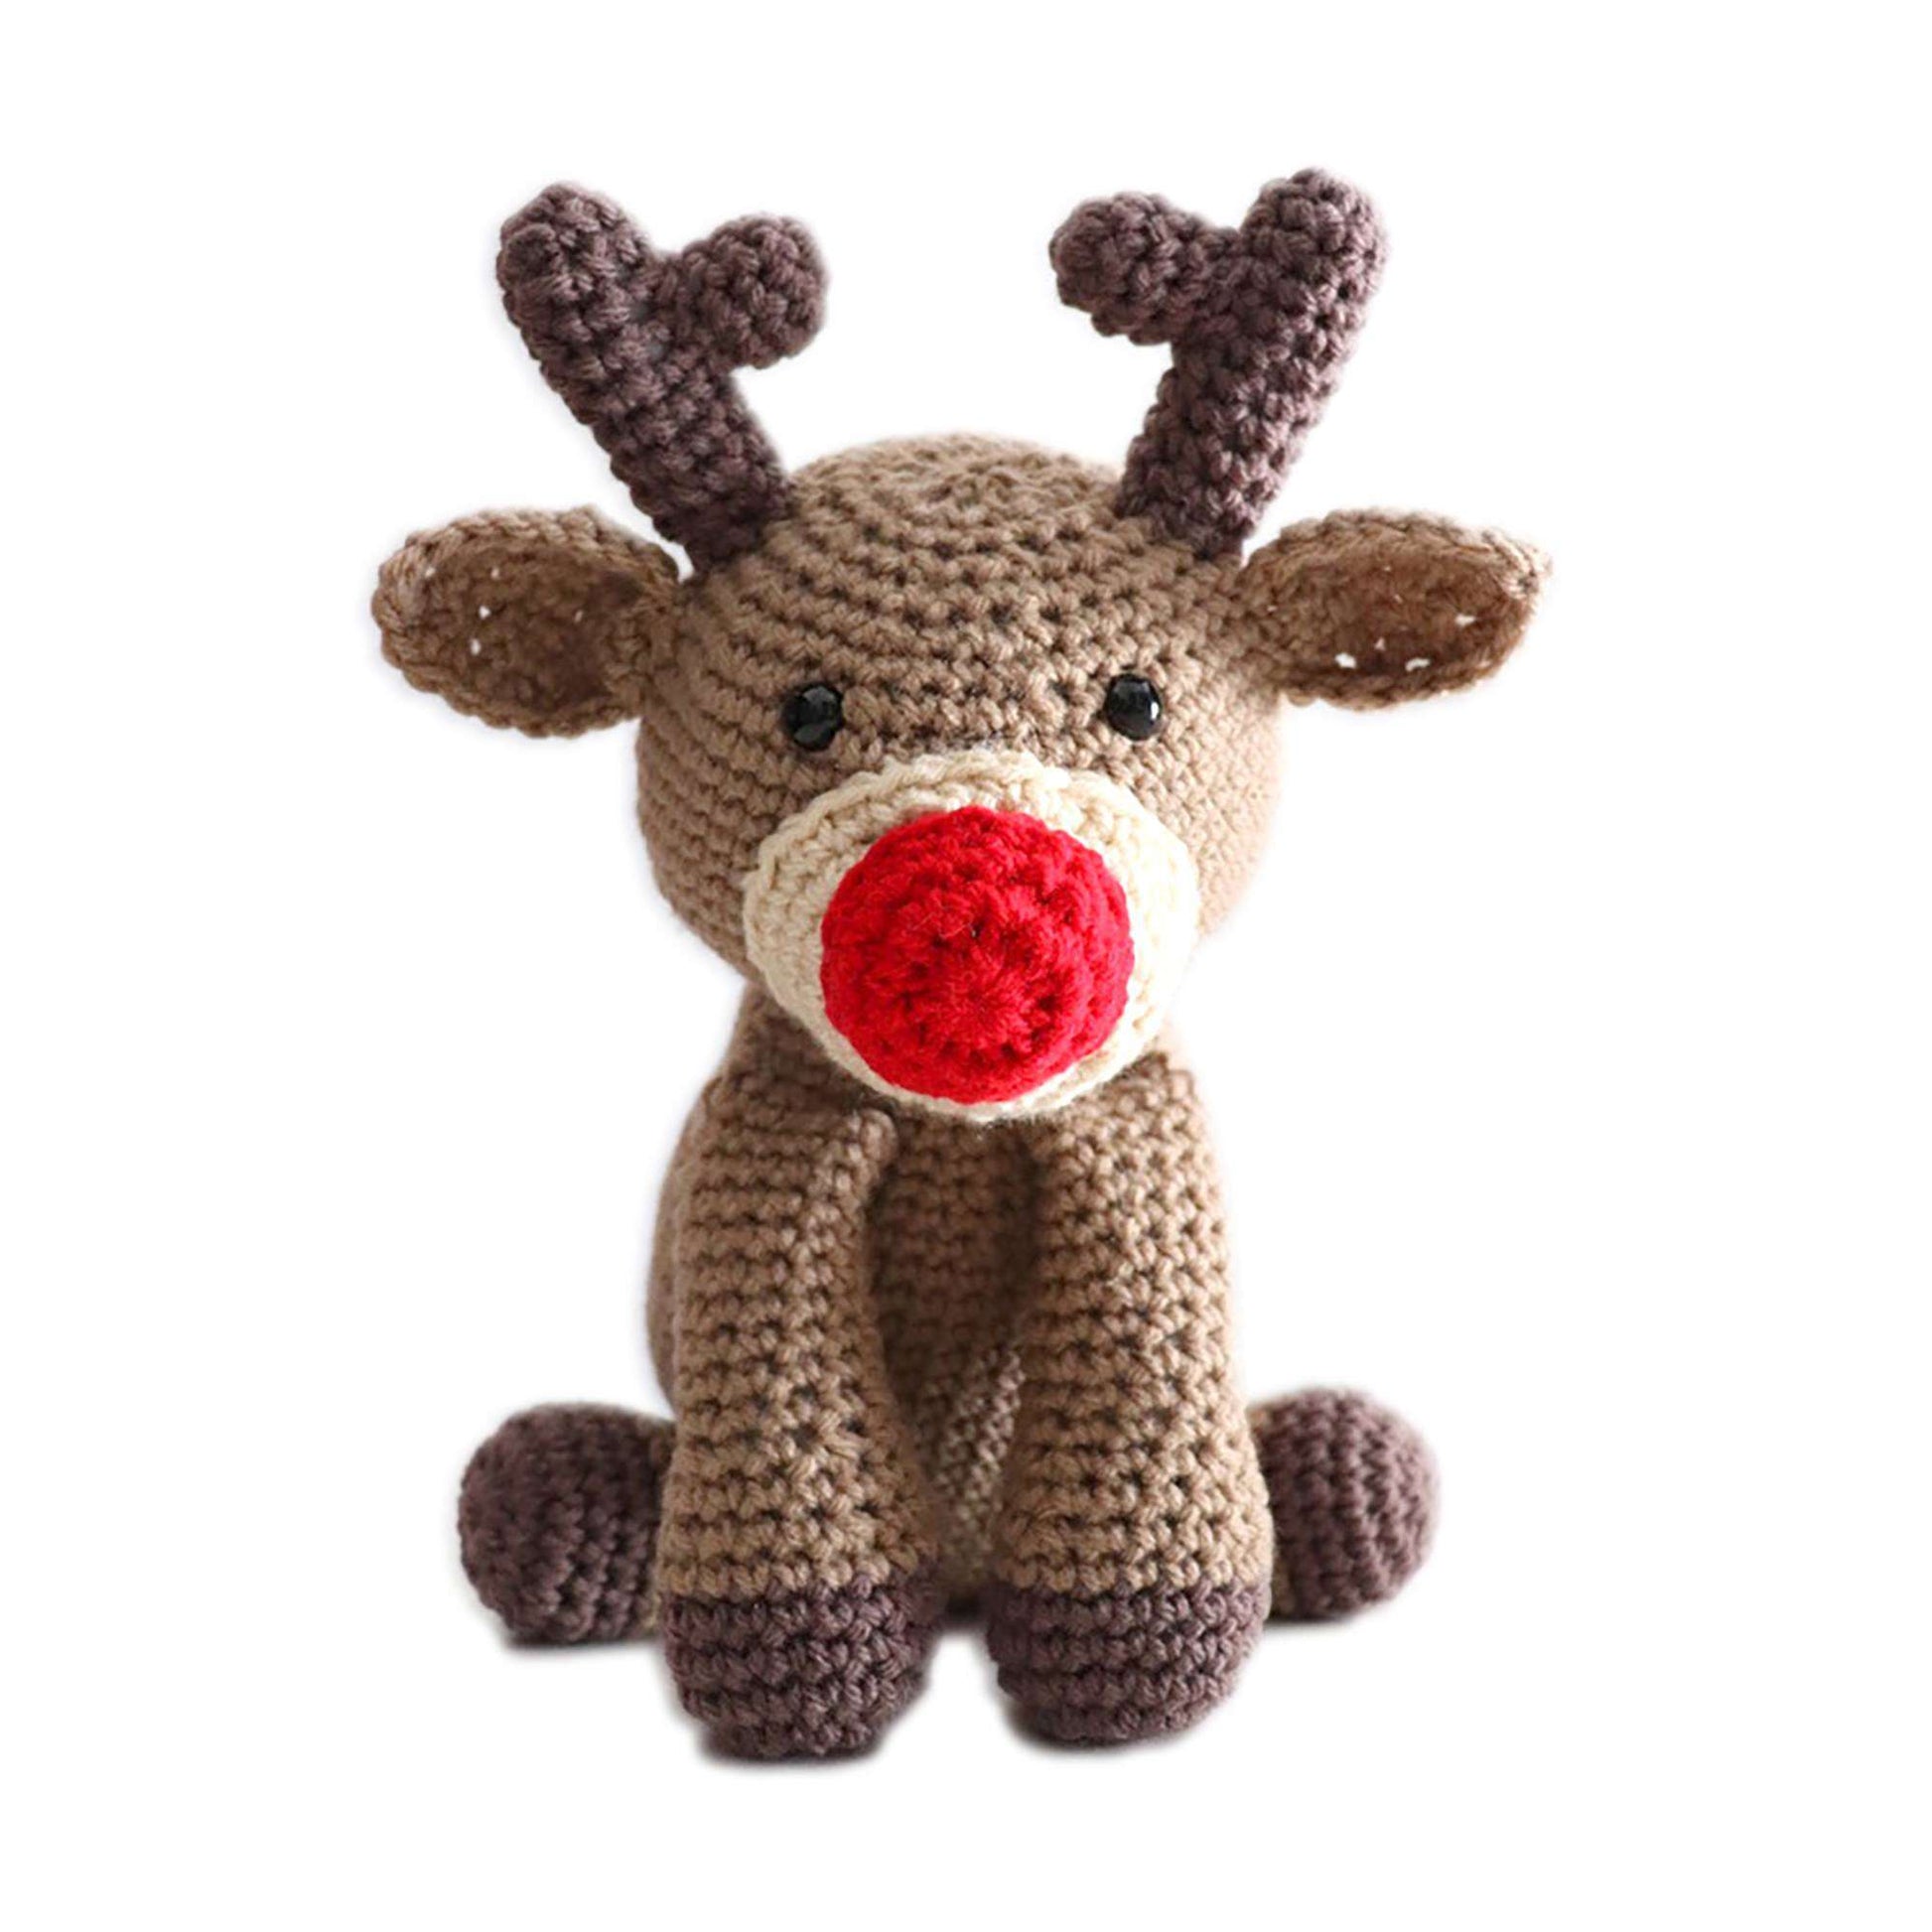 Bernat Crochet Reindeer Stuffie Crochet Toy made in Bernat Super Value yarn